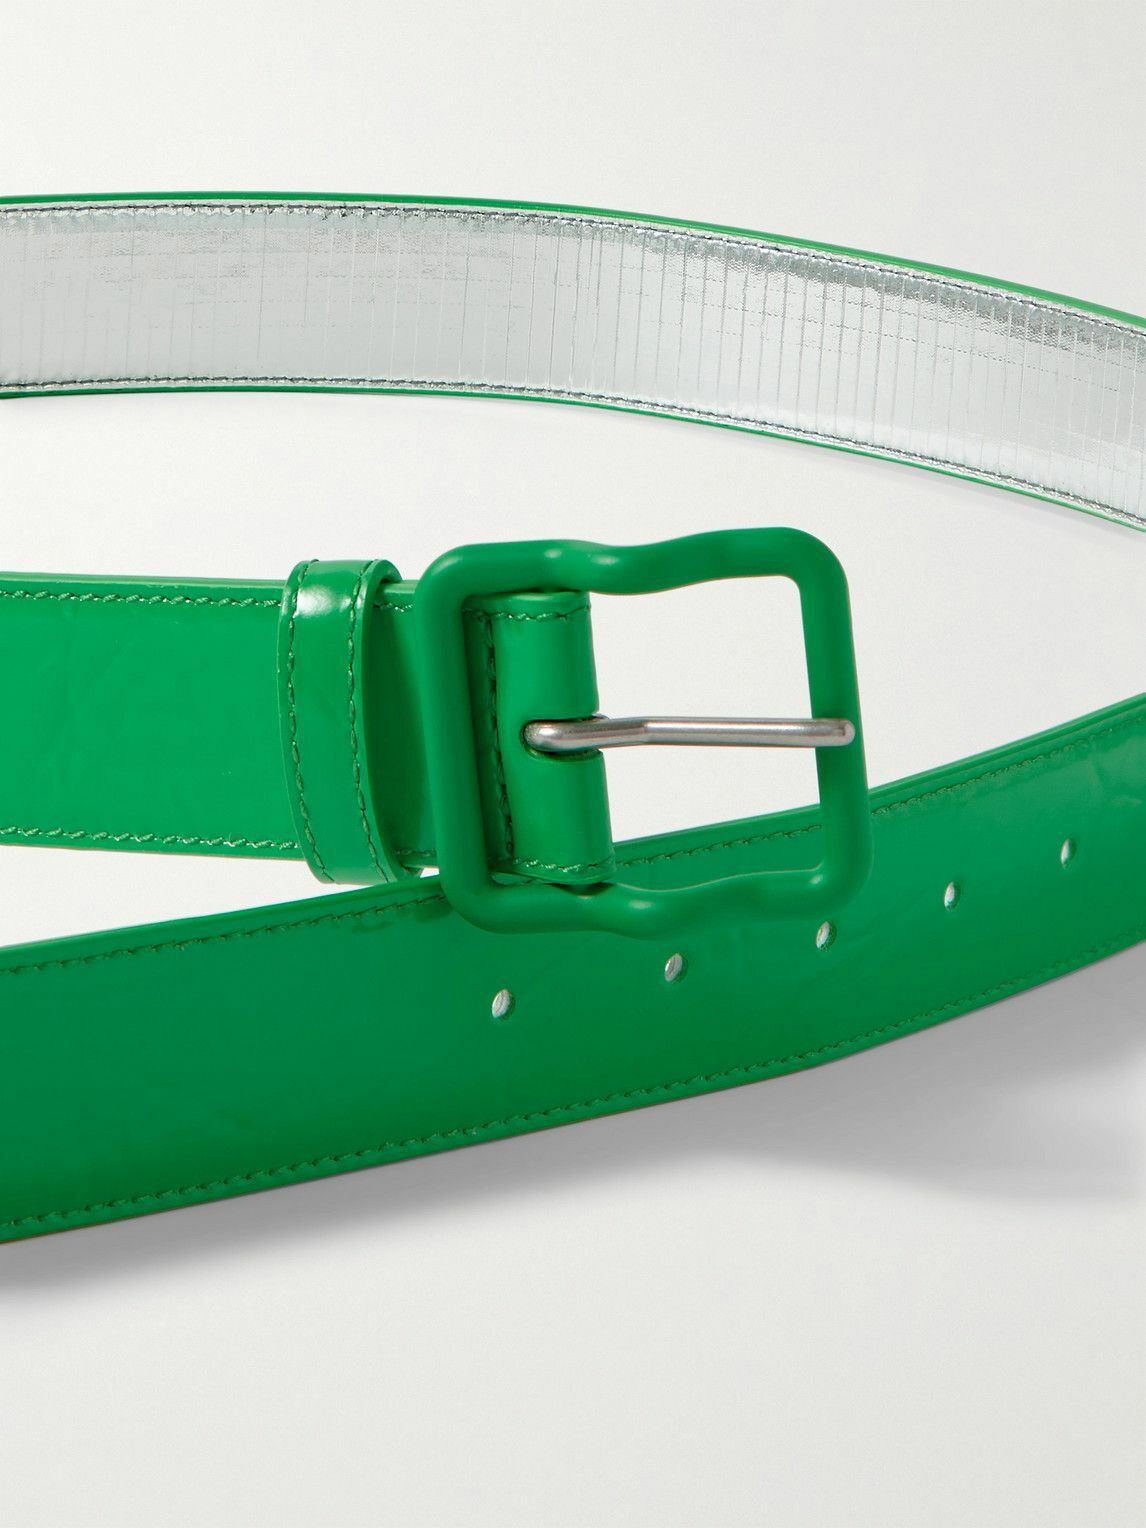 Bottega Veneta Intrecciato leather belt - Green